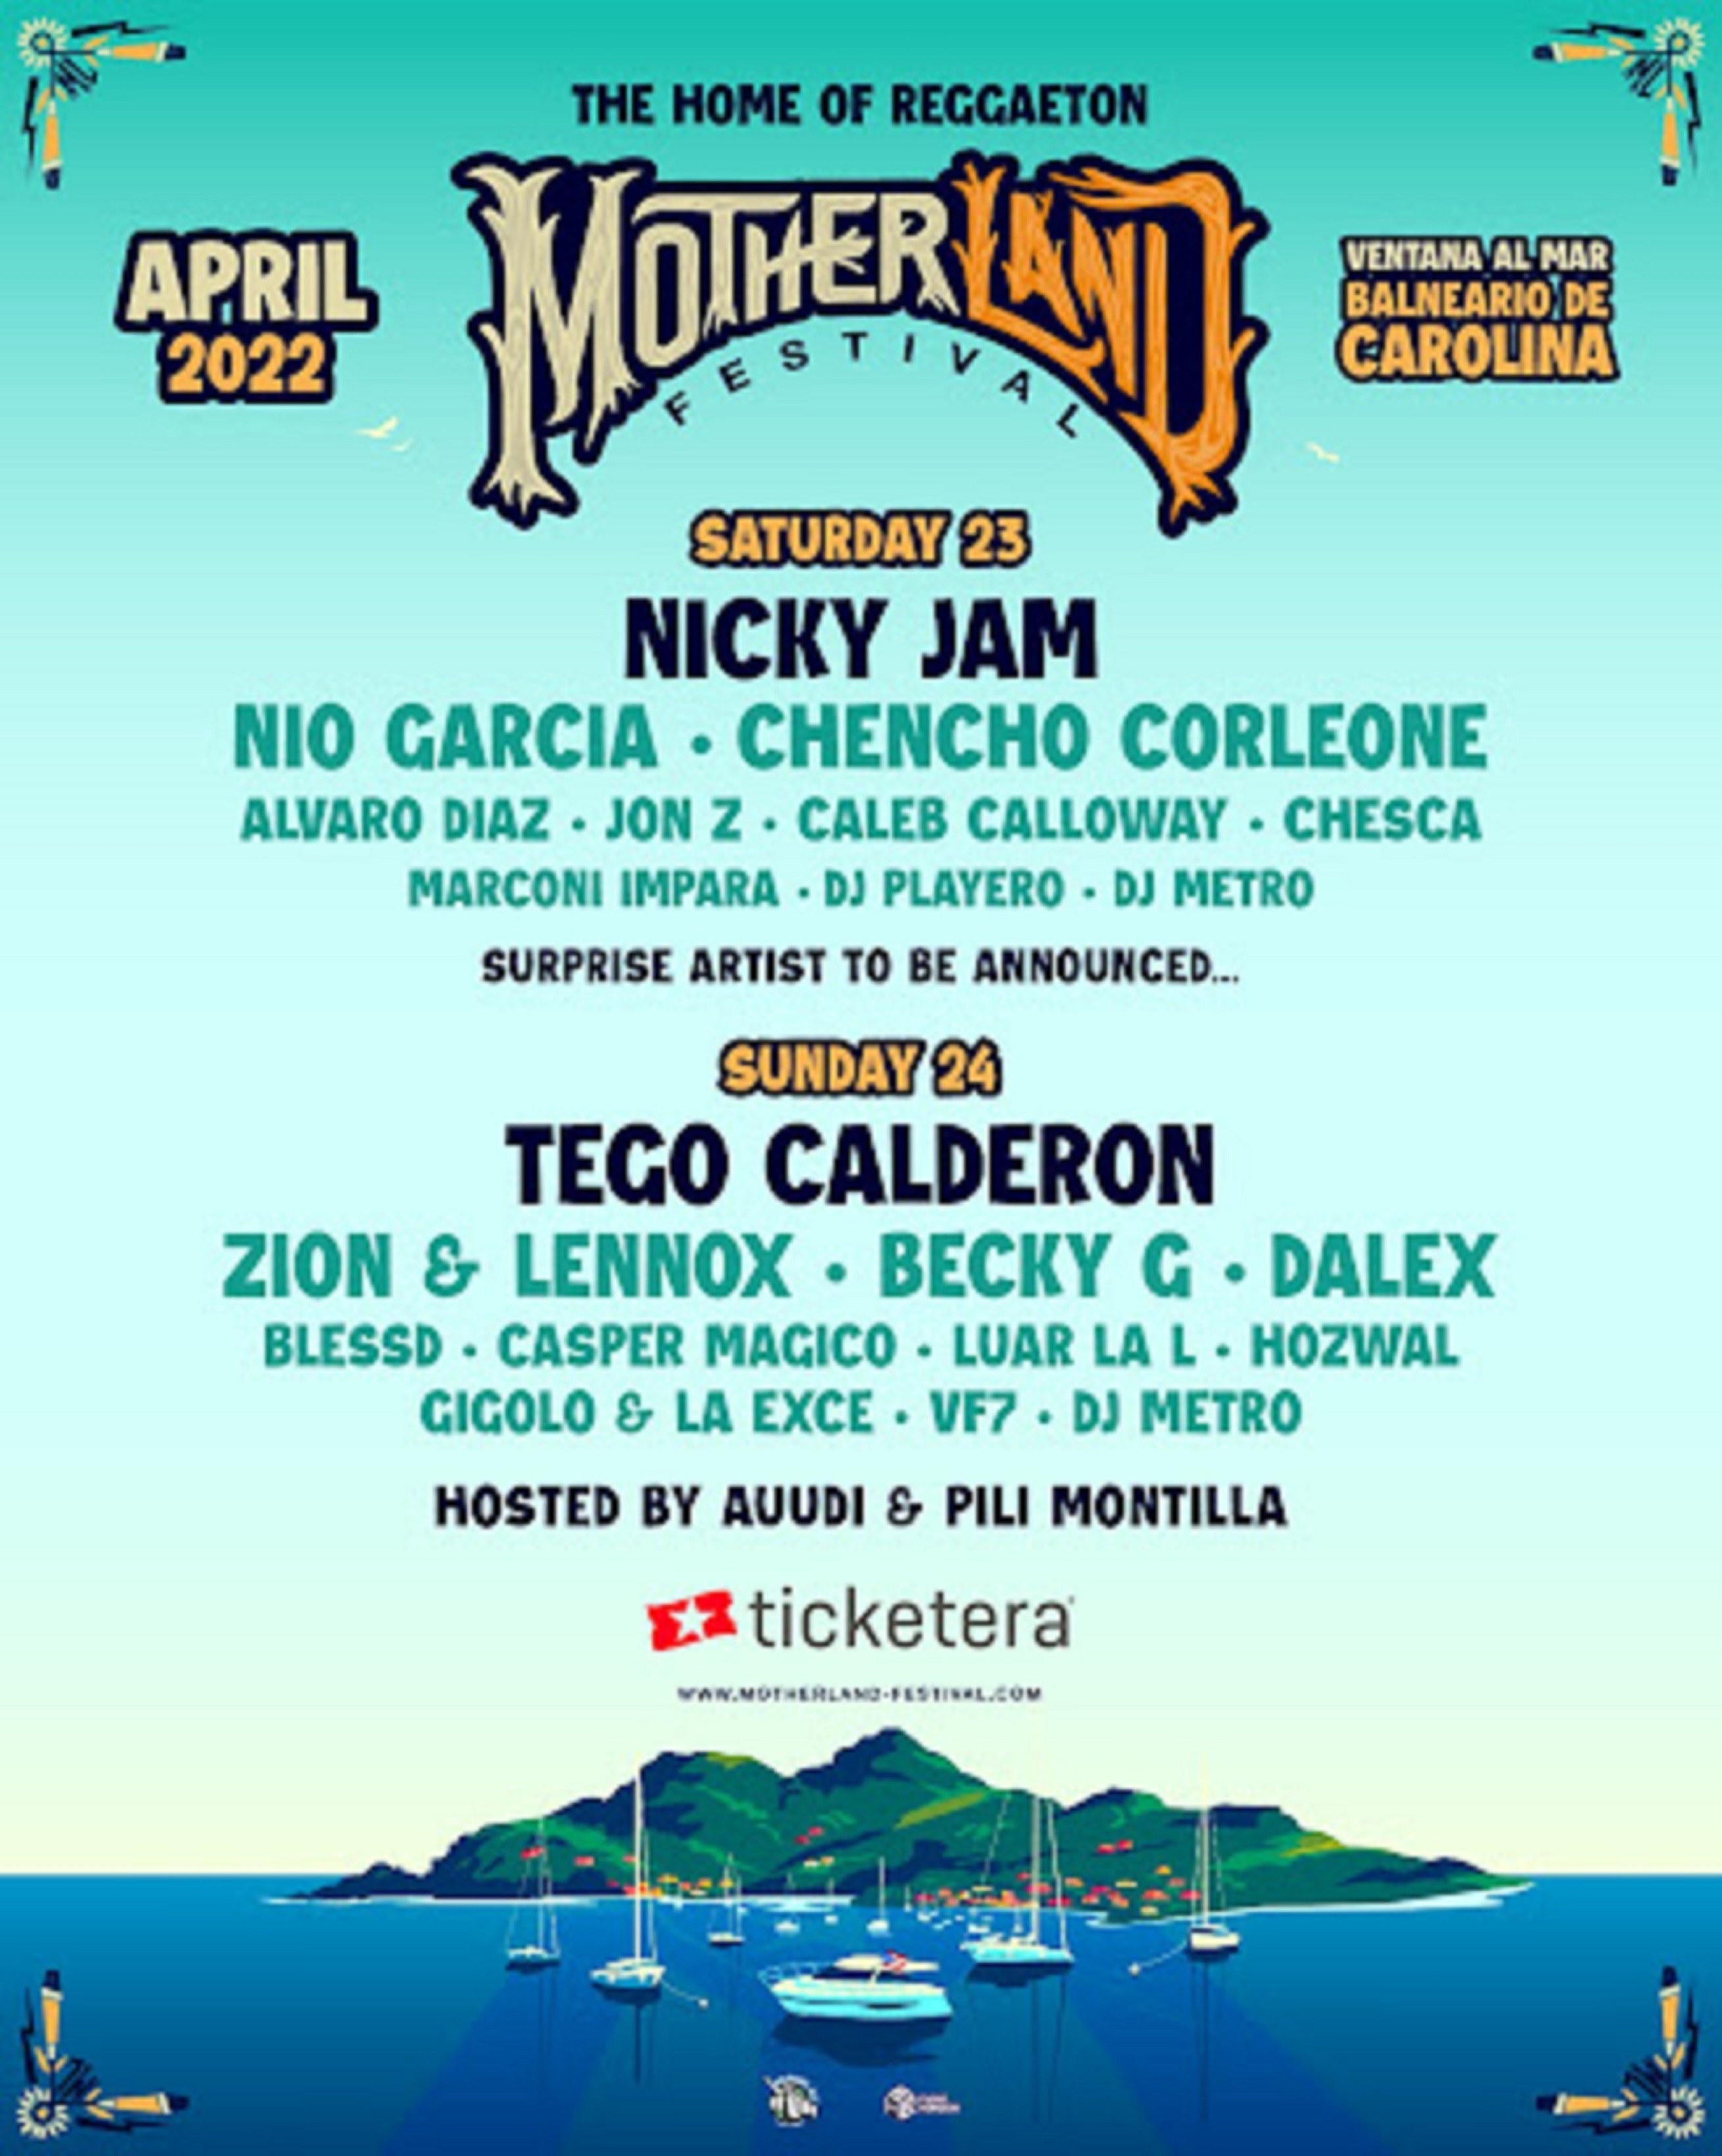 San Juan, PR's First Reggaeton Festival, Motherland Festival Announces Nicky Jam, Tego Calderon, Becky G + Venue April 23, 24 2022